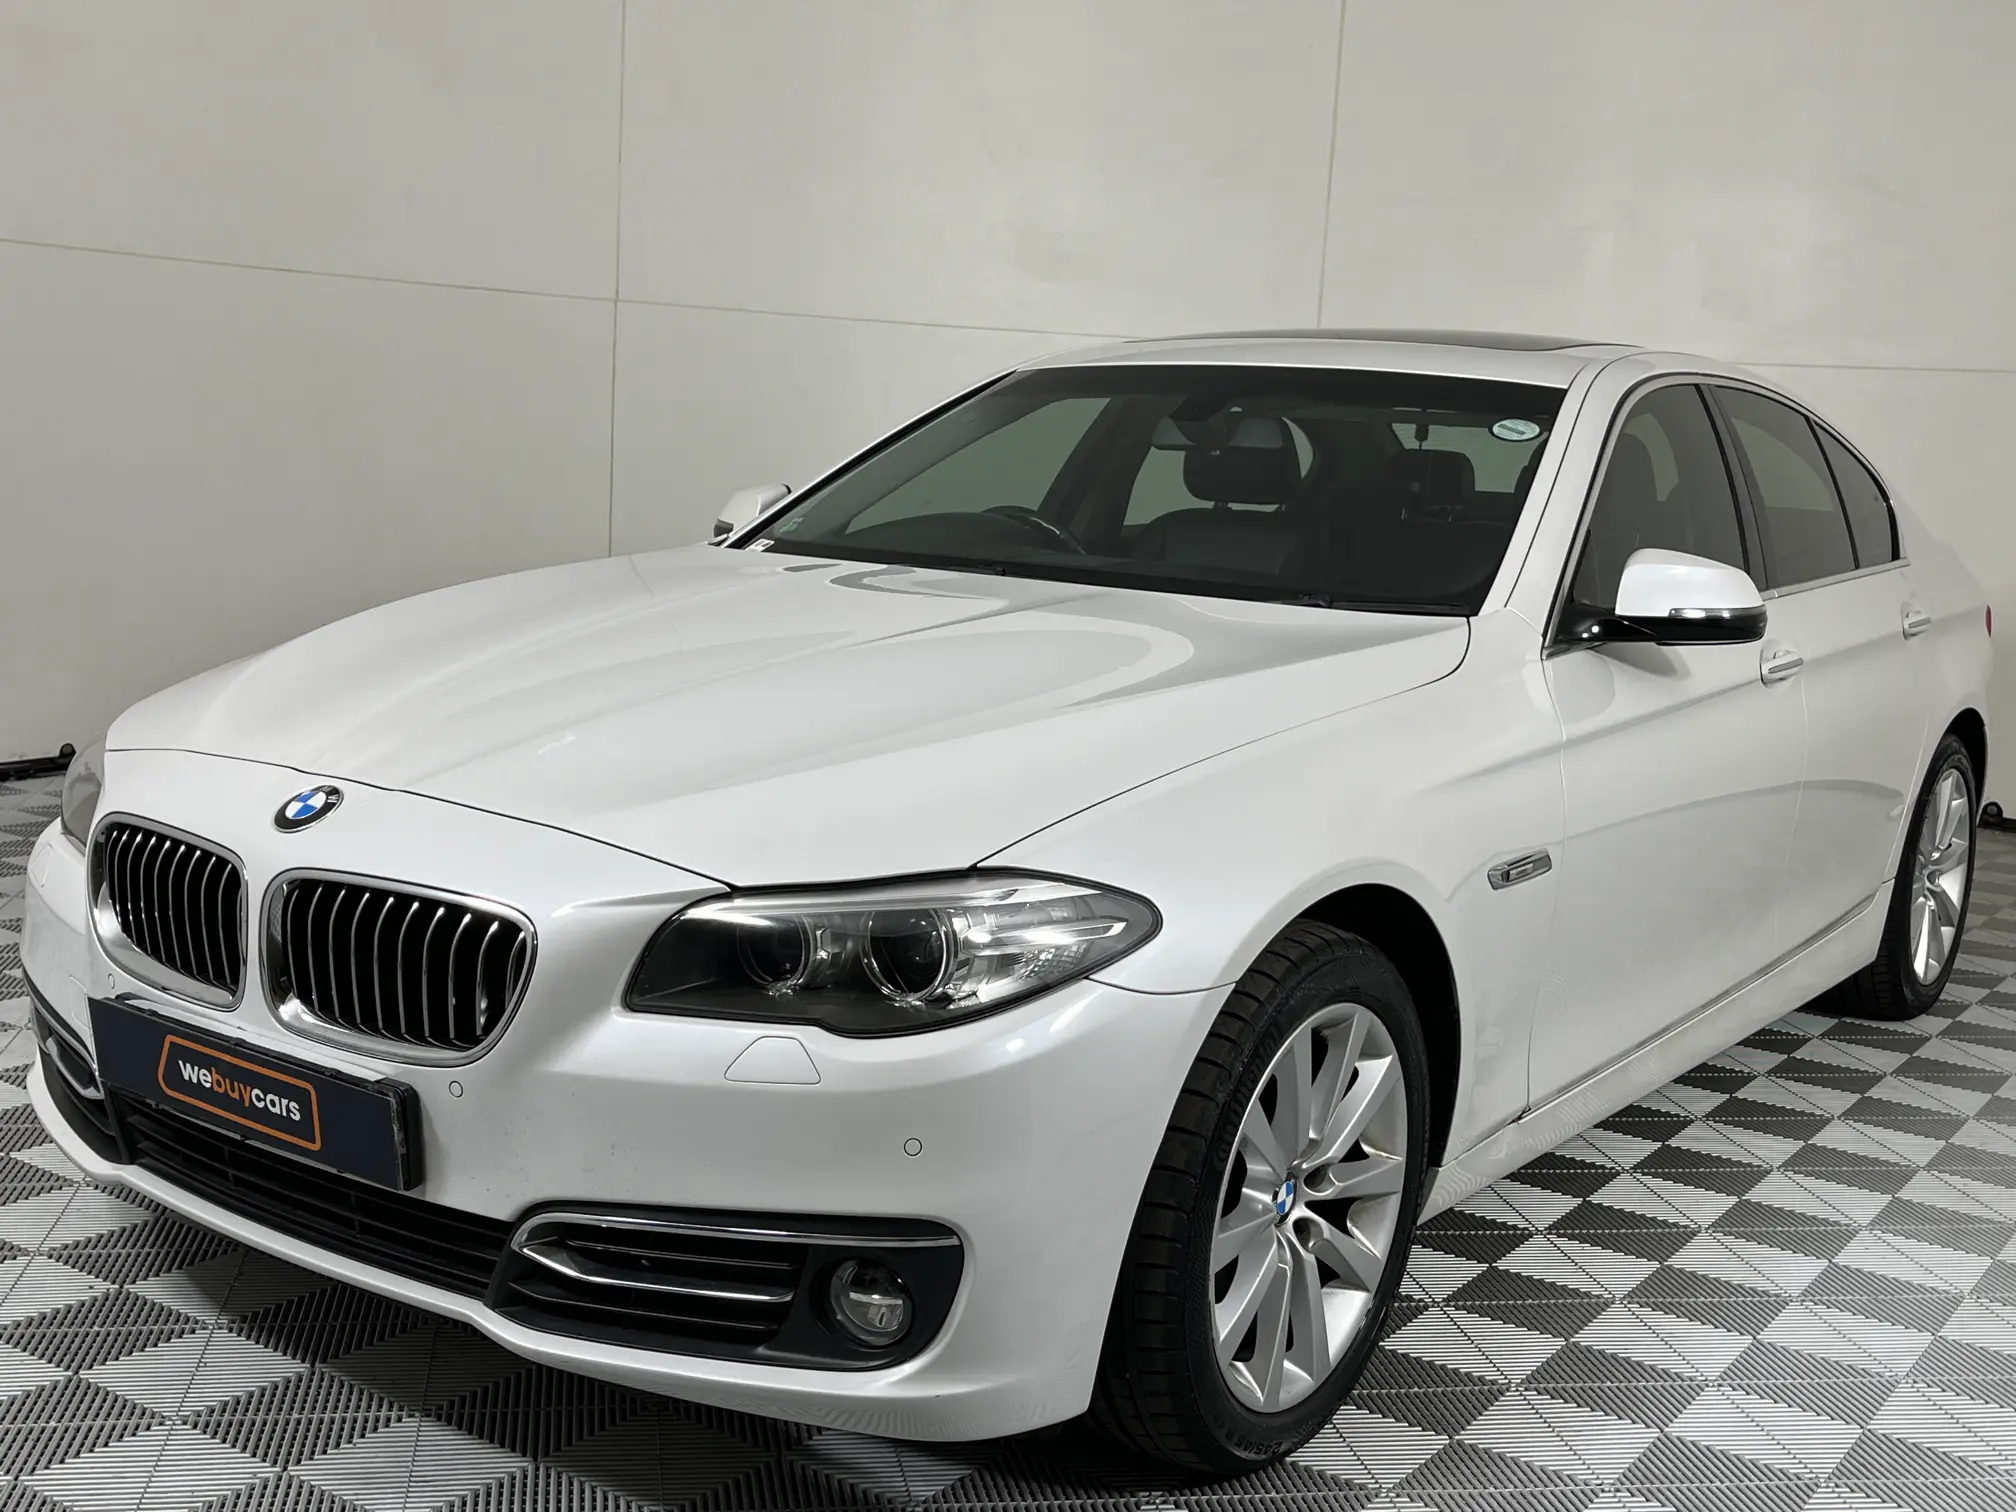 2014 BMW 5 Series 520d Auto (F10)